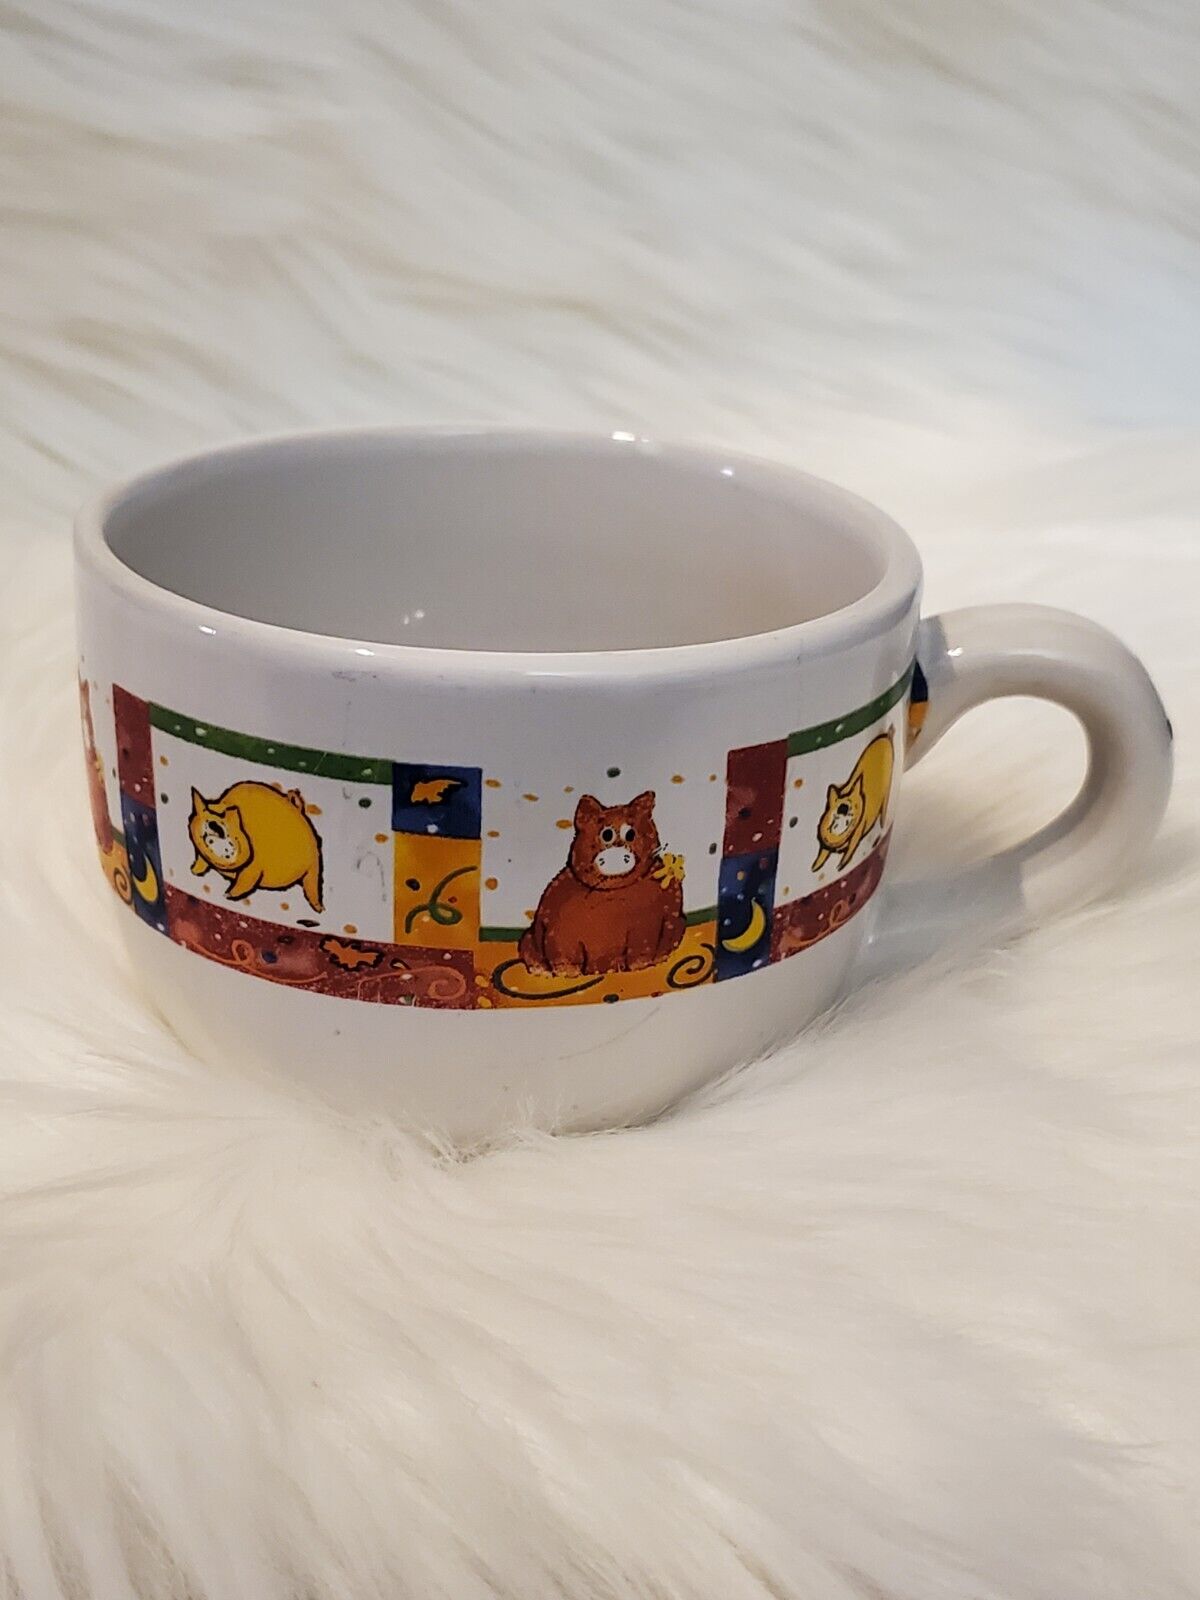 16 oz Mug Cup Coffee Tea Soup Royal Norfolk Cat Pig Pattern